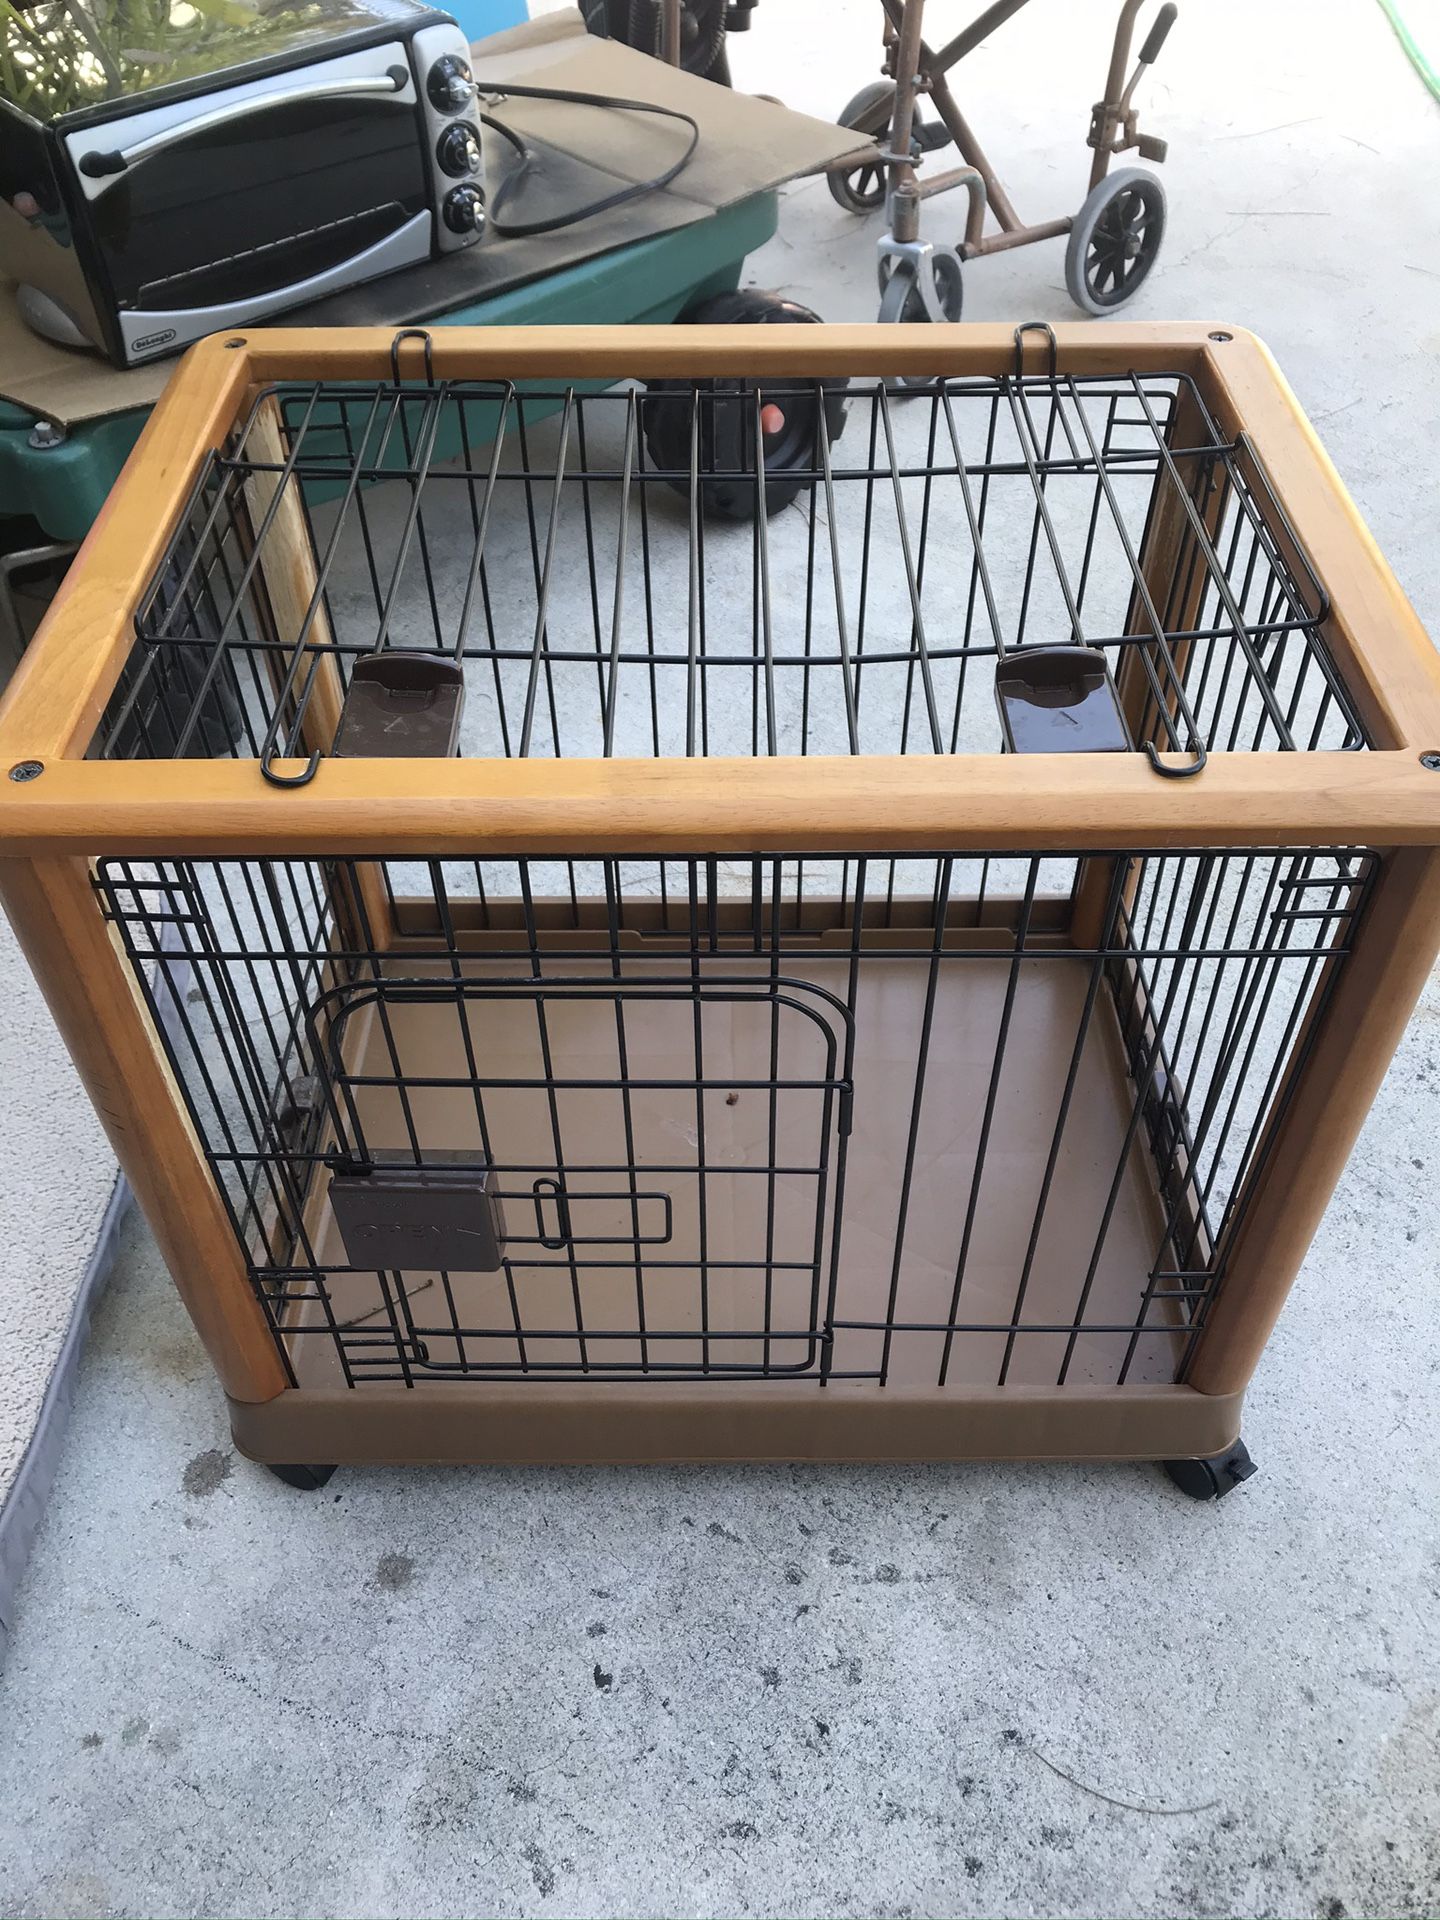 Training Pet crate. Sale